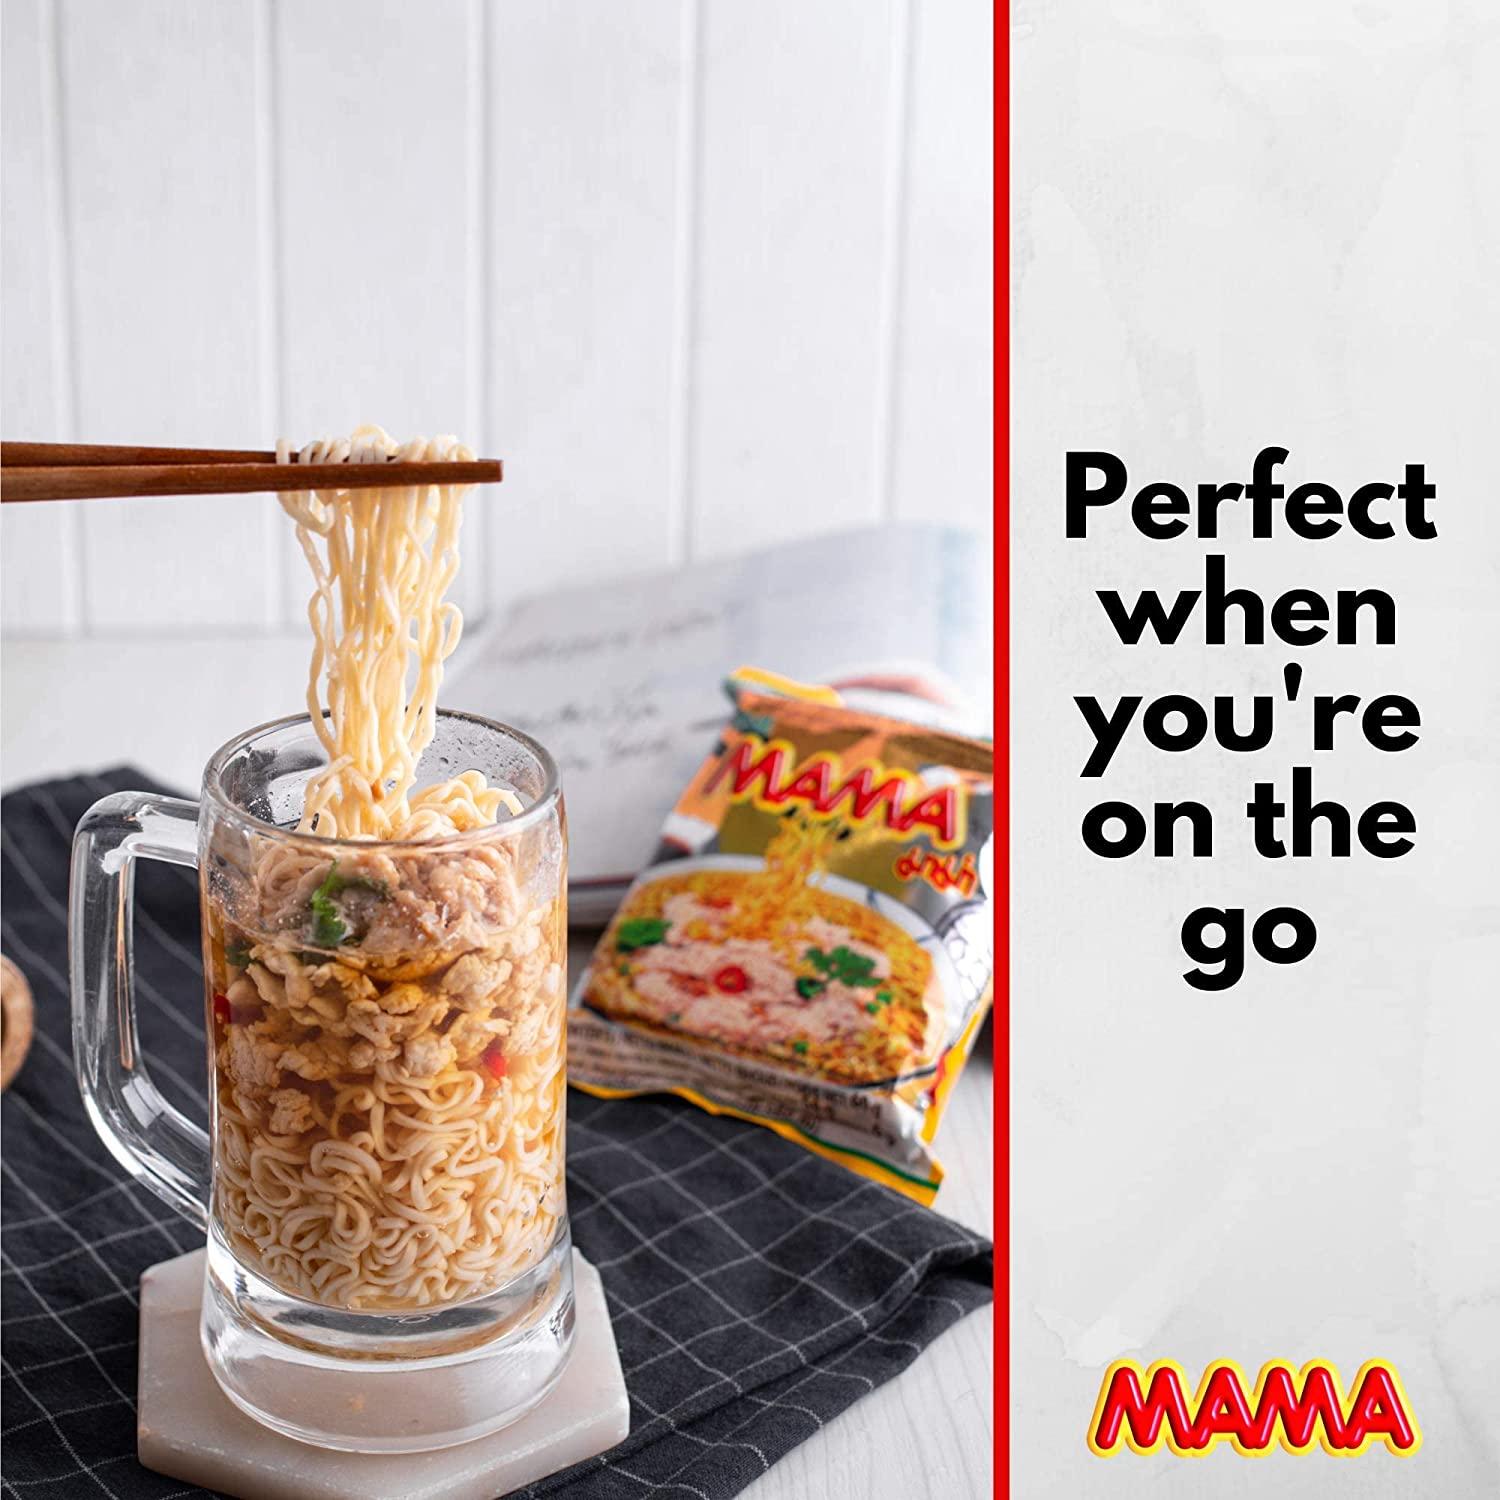 Mama Ramen Beef Flavor - 60 g [Noodles 53 g + Seasoning 7 g]